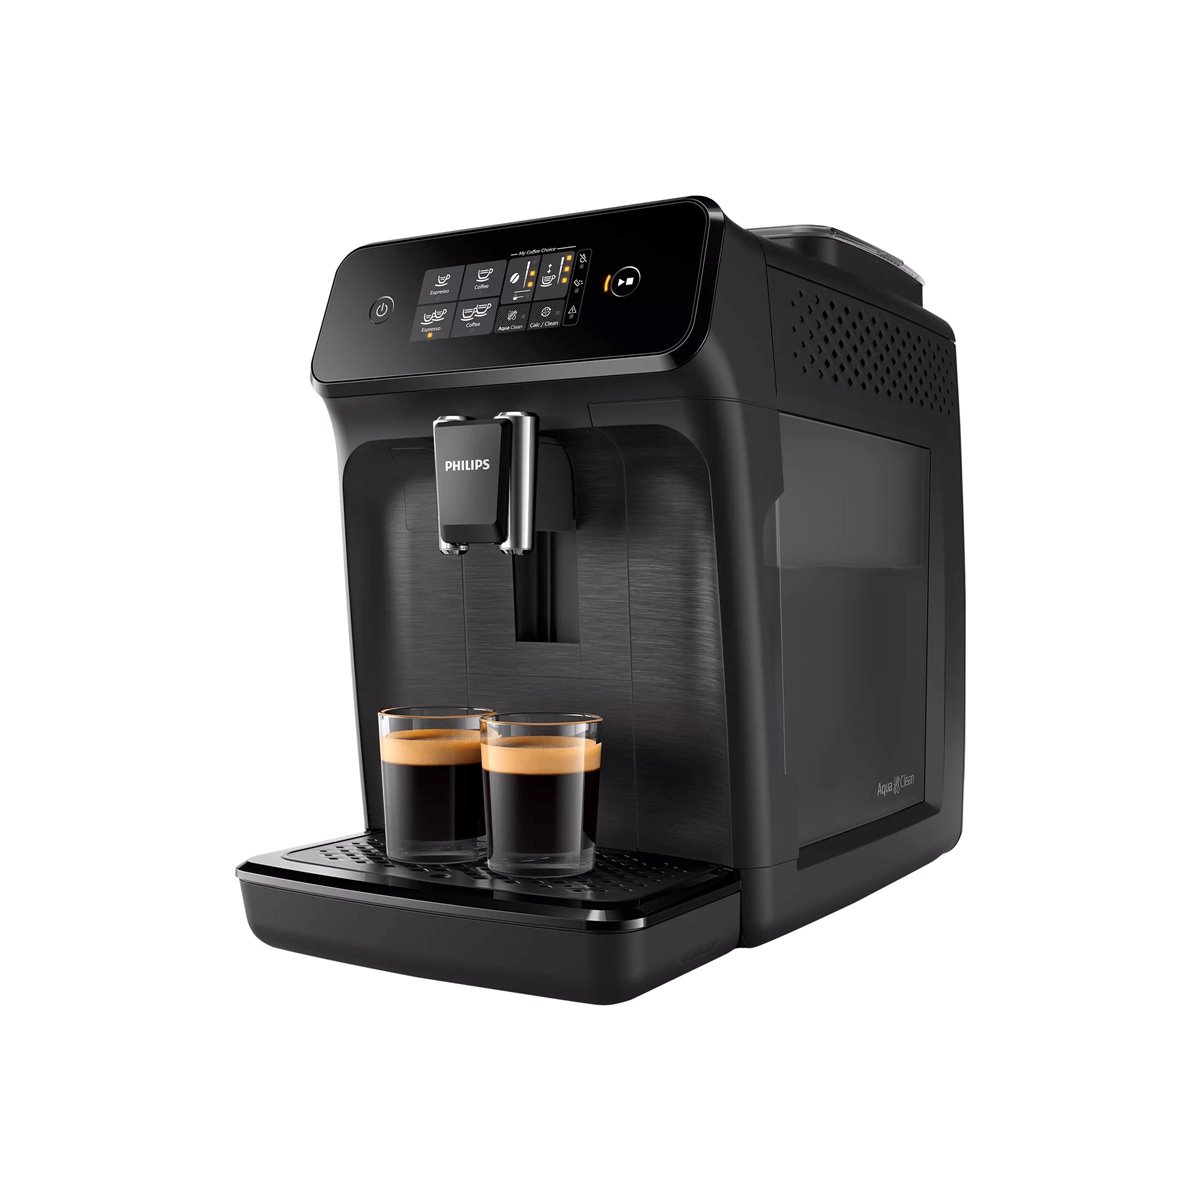 Philips 1200 series EP1200-00 - Espresso machine - 1.8 L - Coffee beans - Built-in grinder - 1500 W - Black